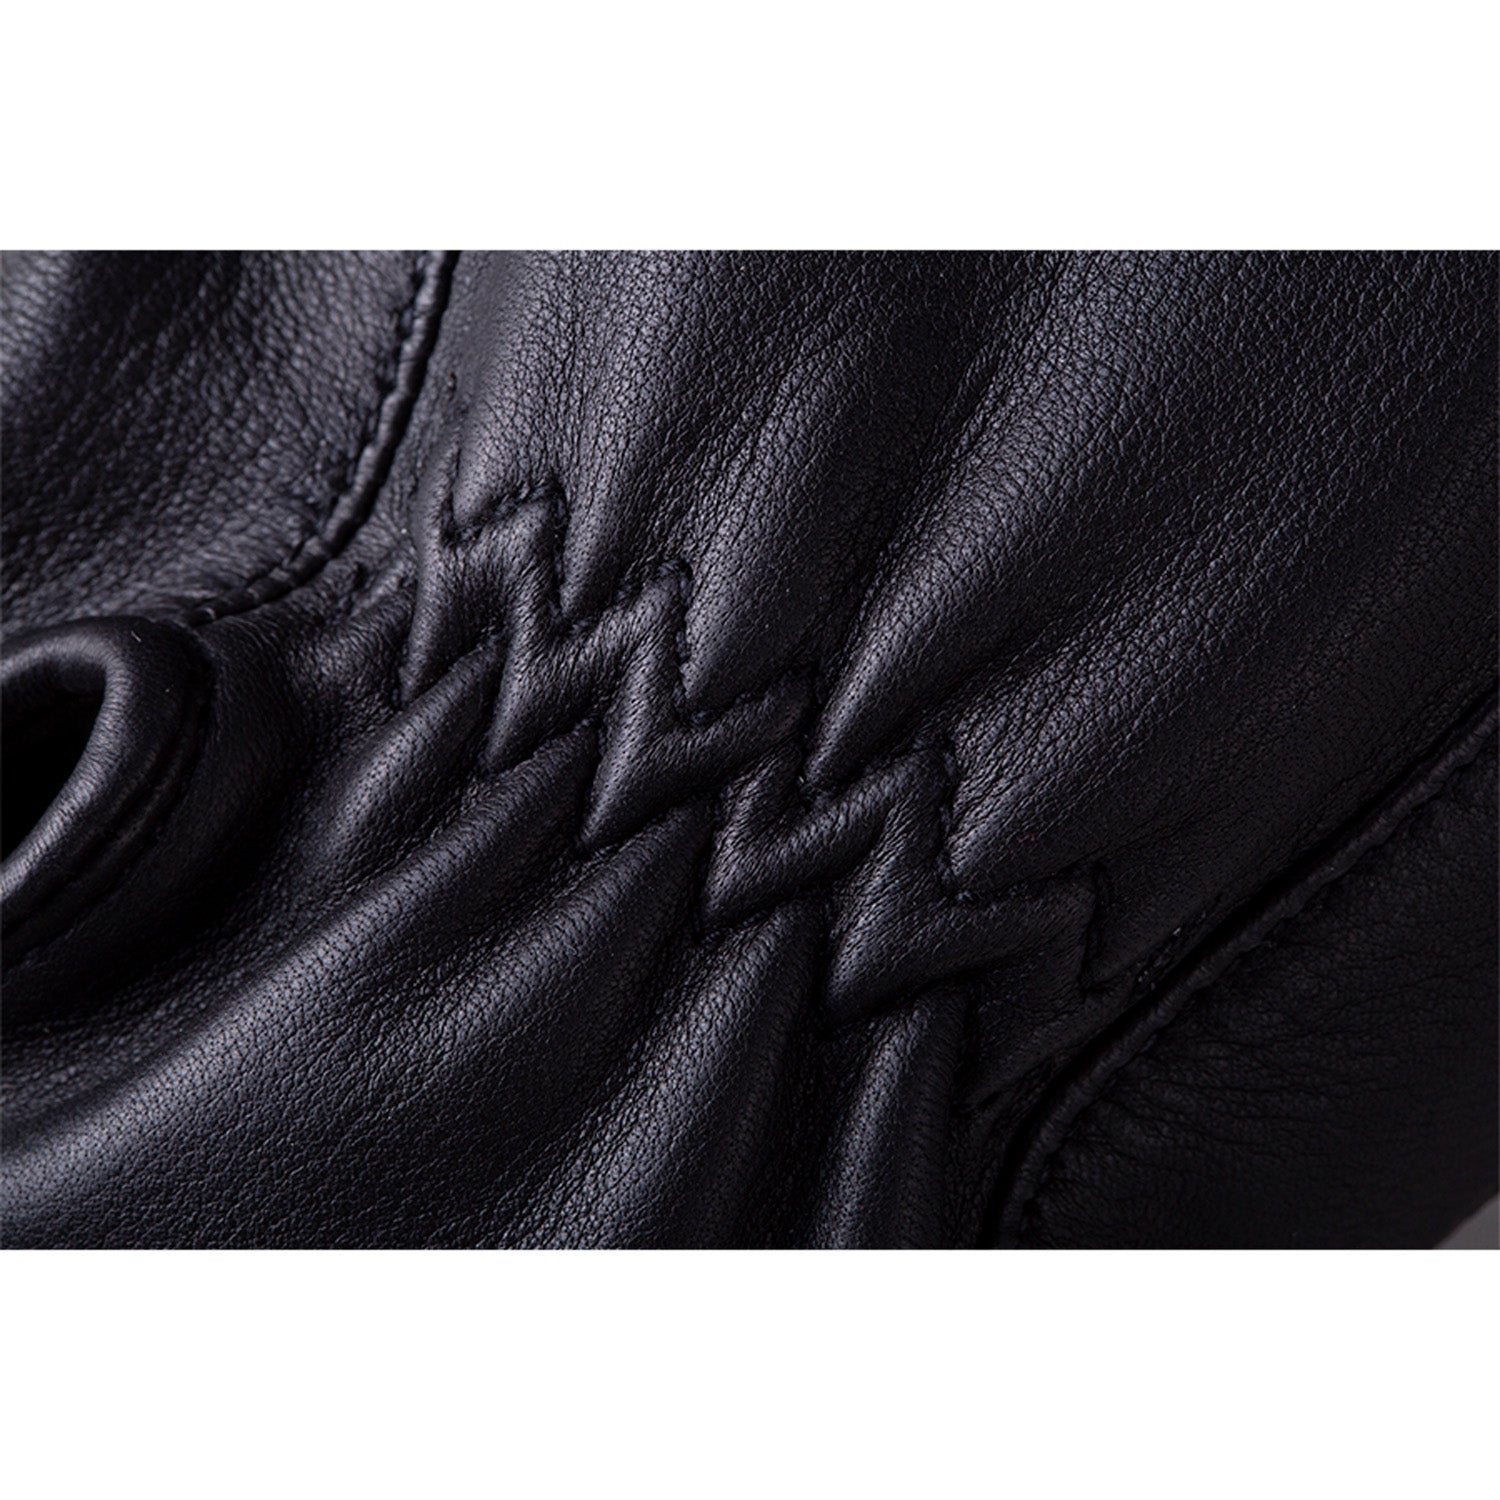 Women's Deerskin Strap Glove, Black